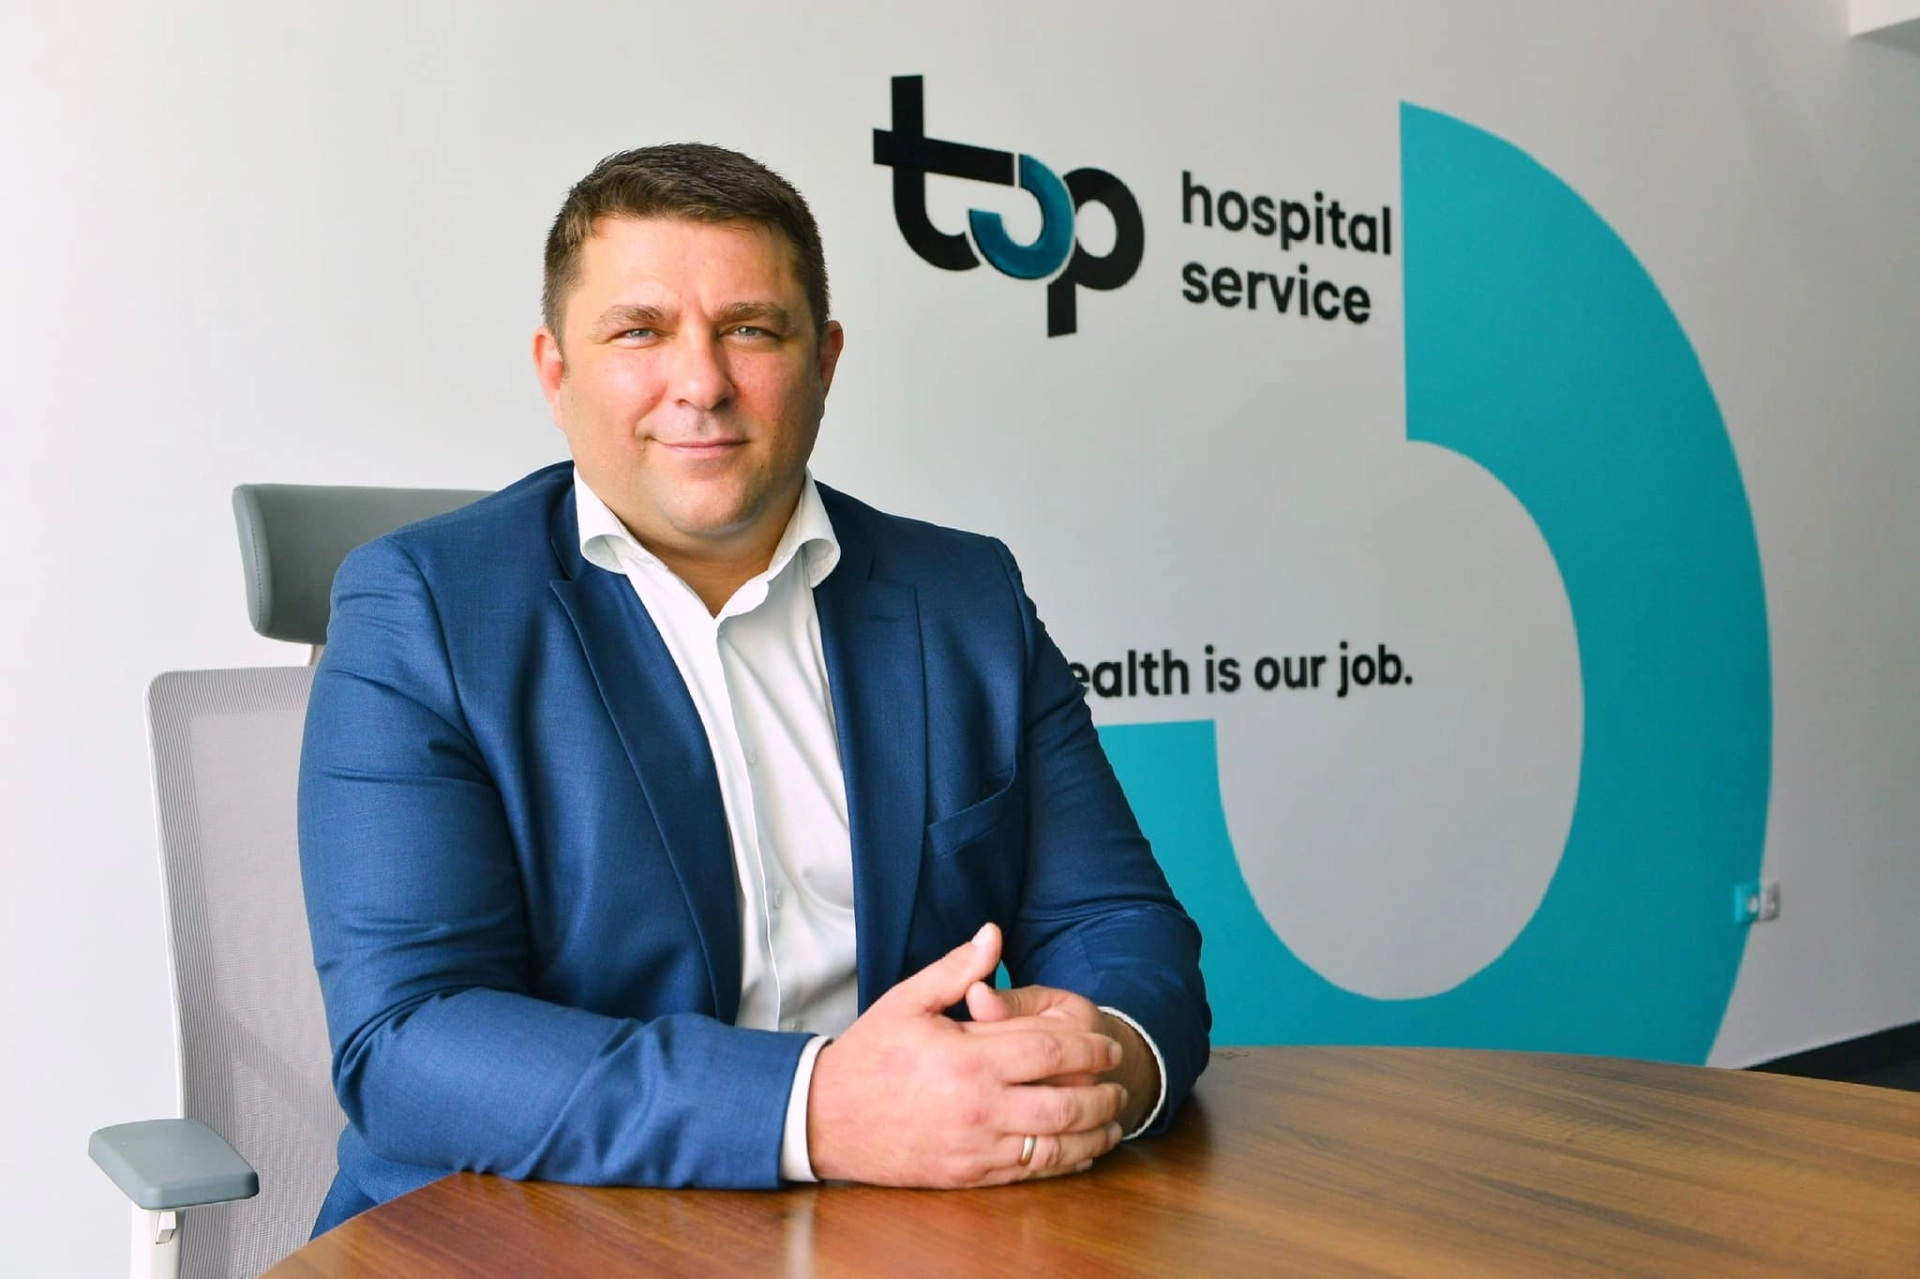 Ivaylo Batinkov, Executive Director of Top Hospital Service